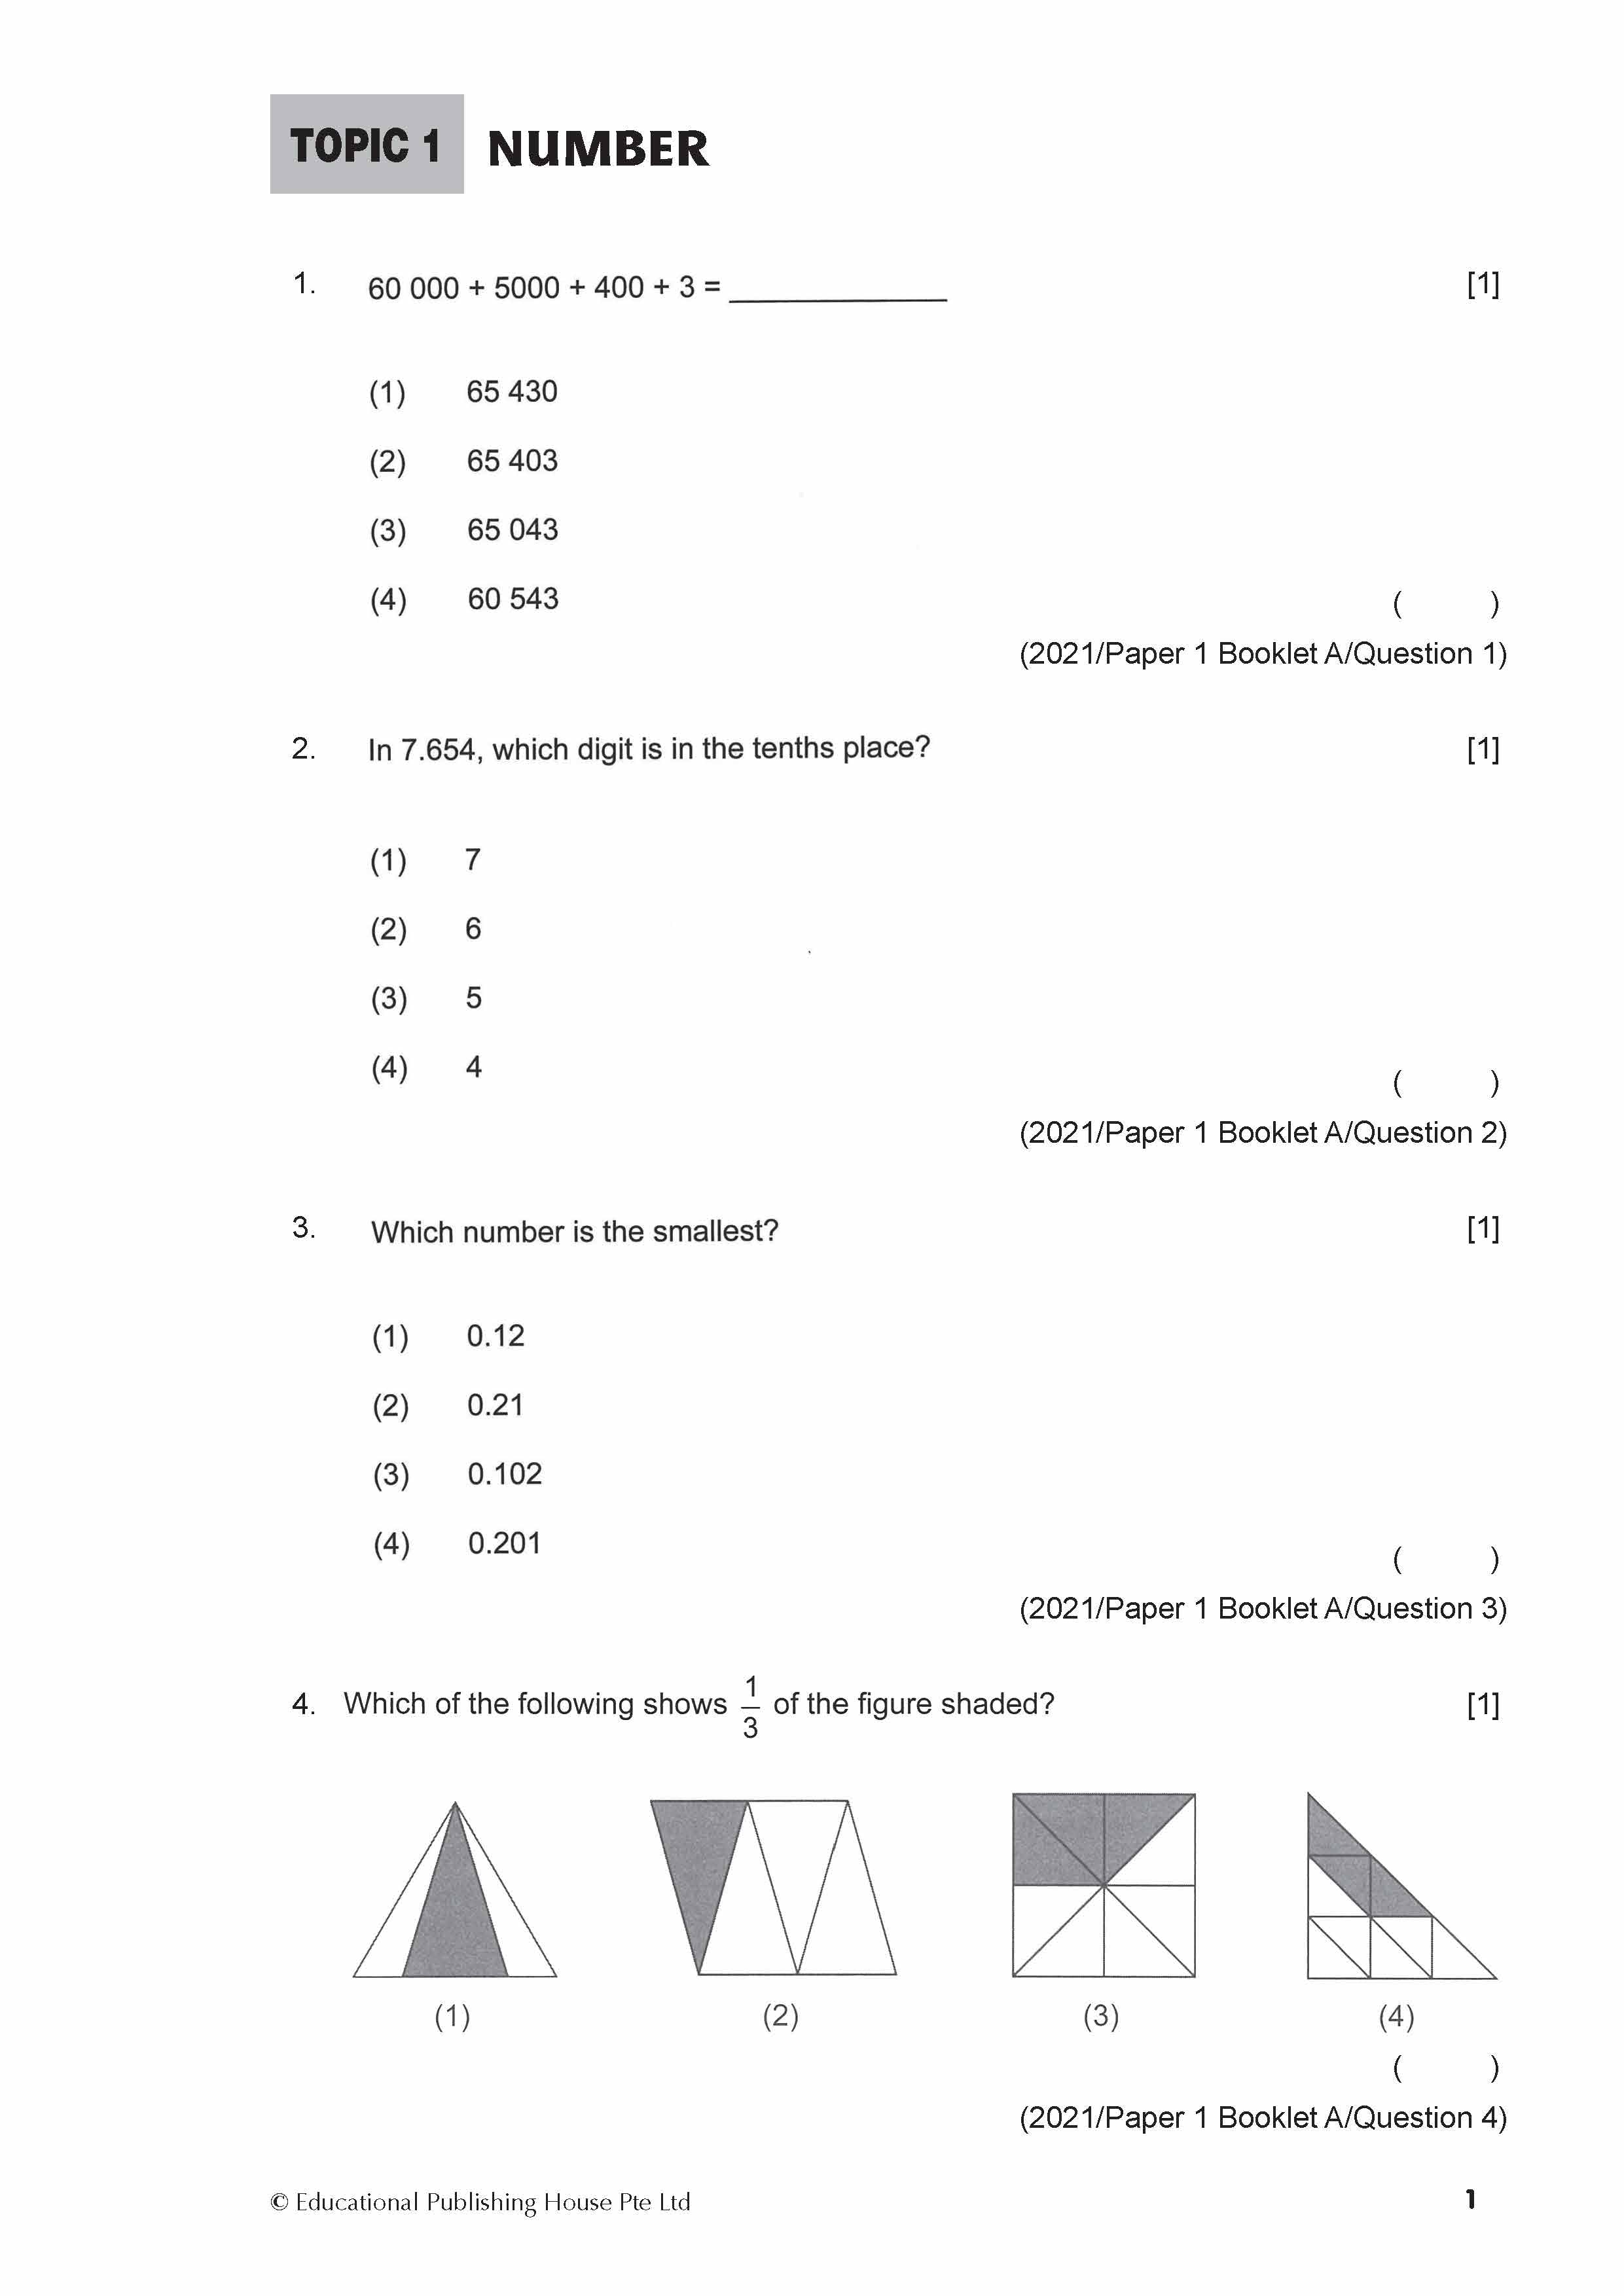 PSLE Mathematics Exam Q&A 21-23 (Topic)